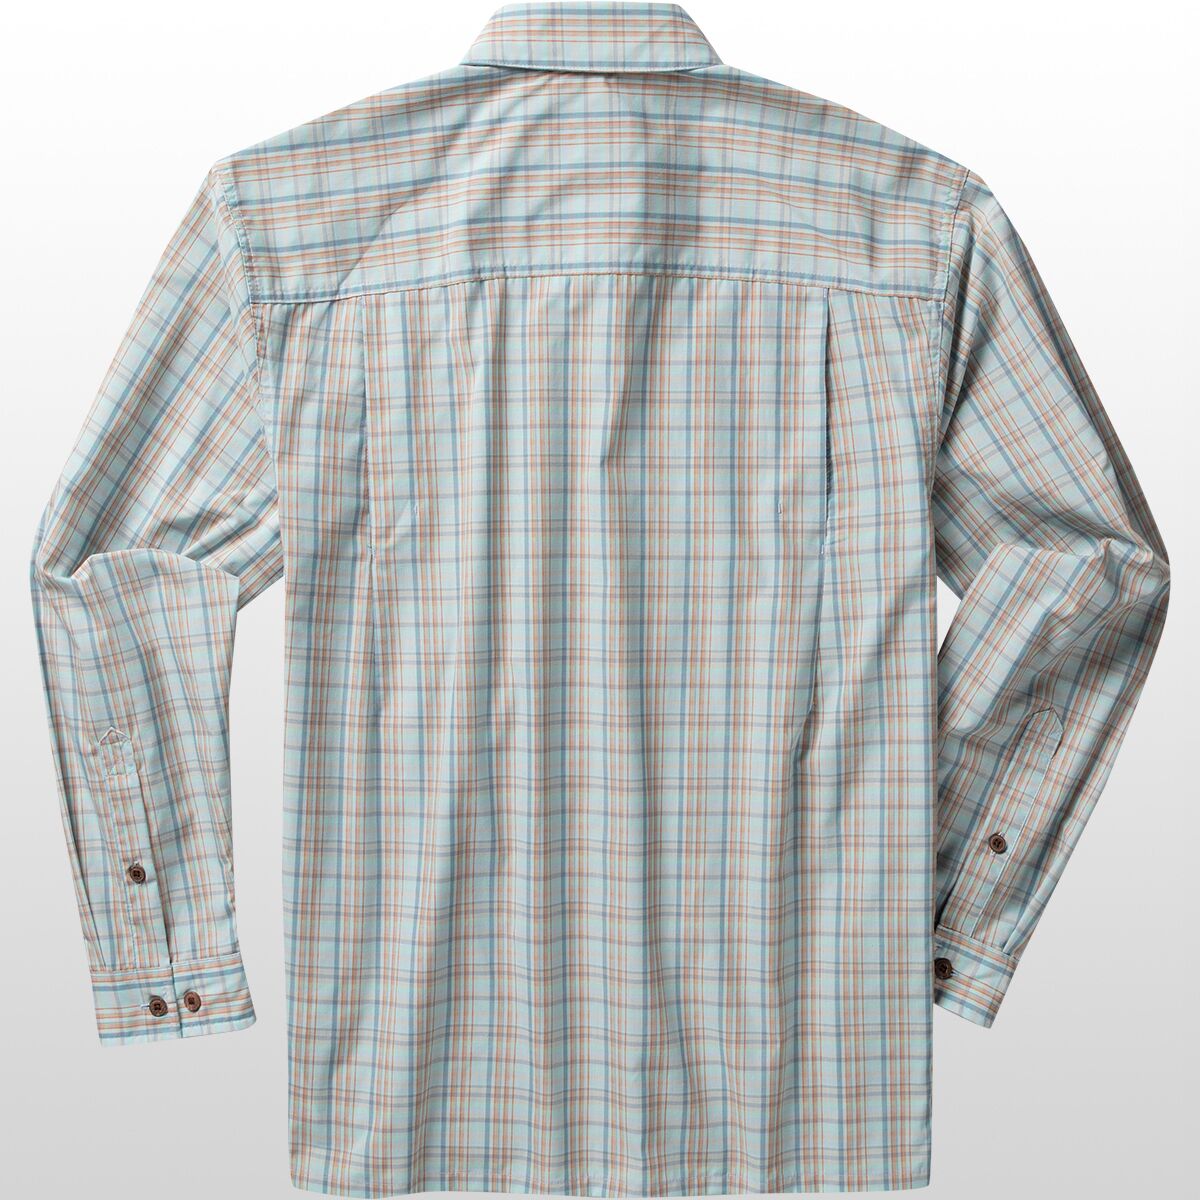 Patagonia Island Hopper II Long-Sleeve Shirt - Men's - Men